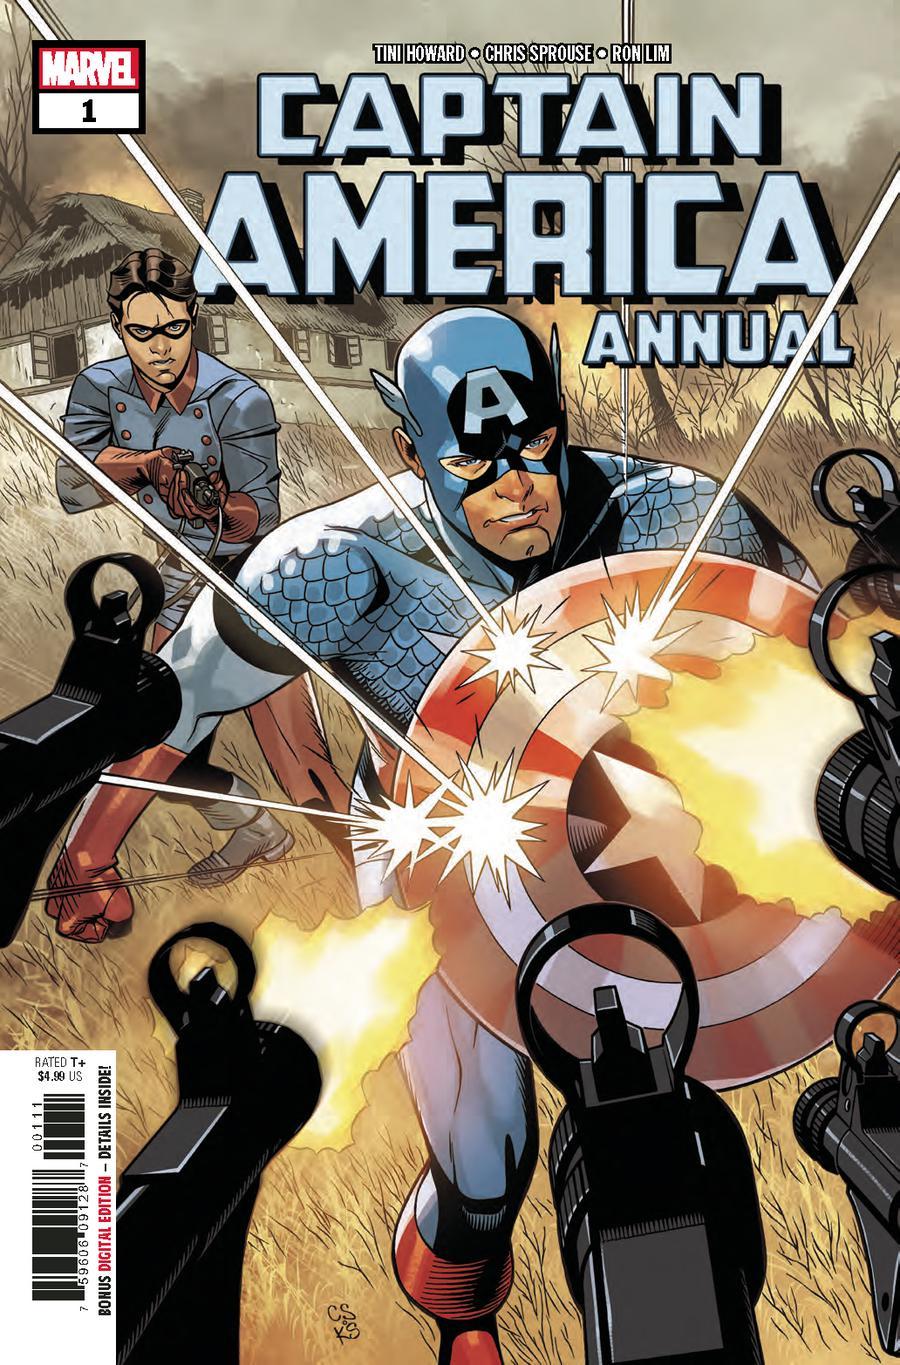 Captain America Vol. 9 Annual #1